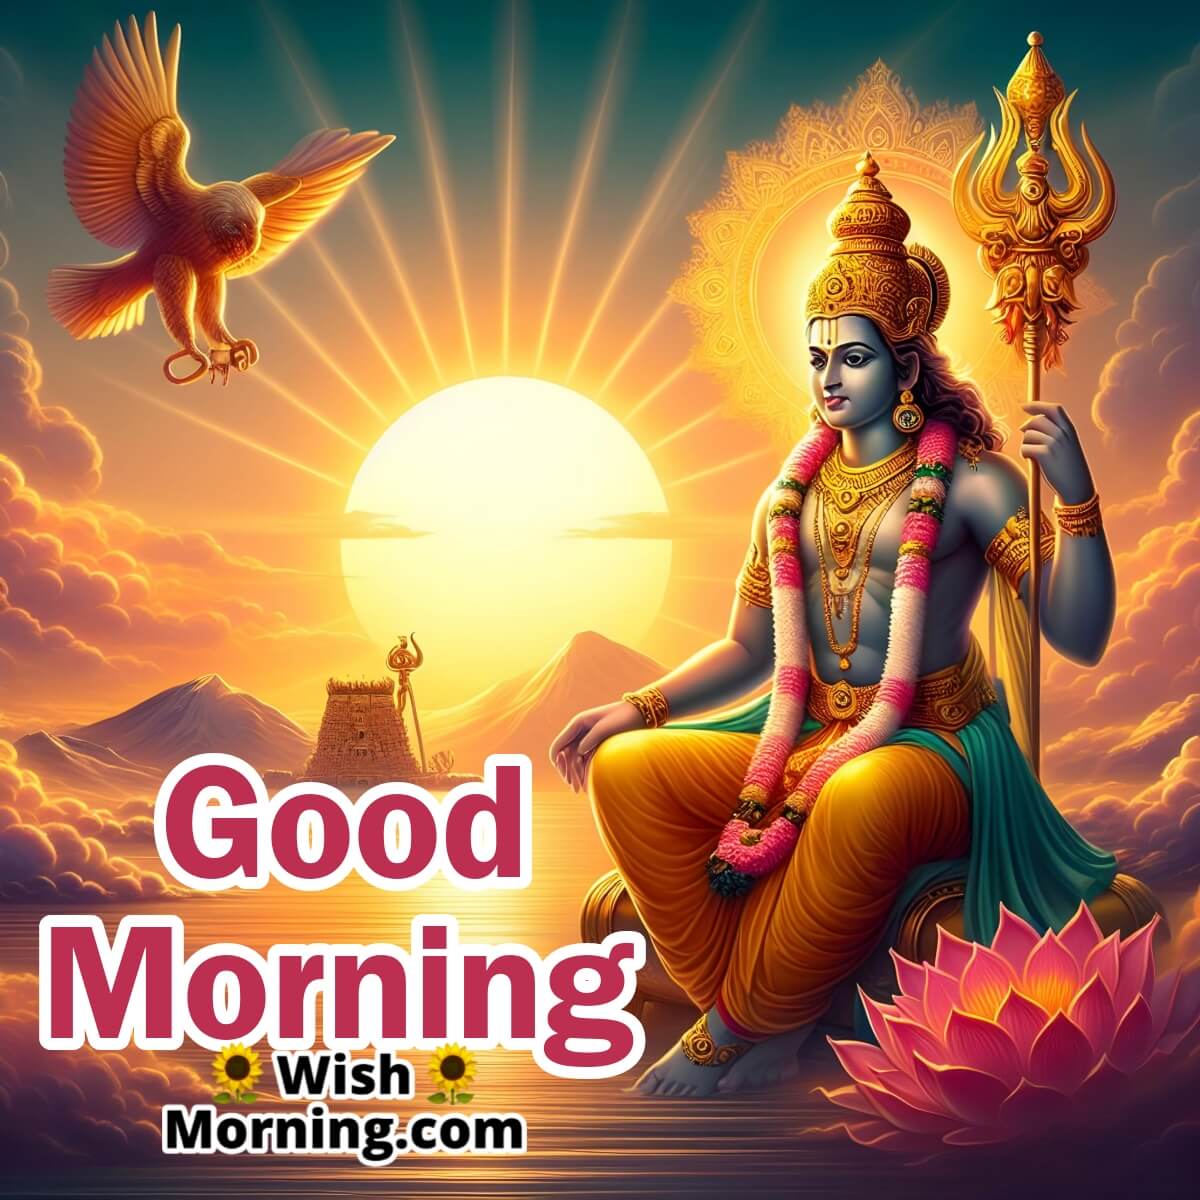 Good Morning Lord Murugan Sunrise Image